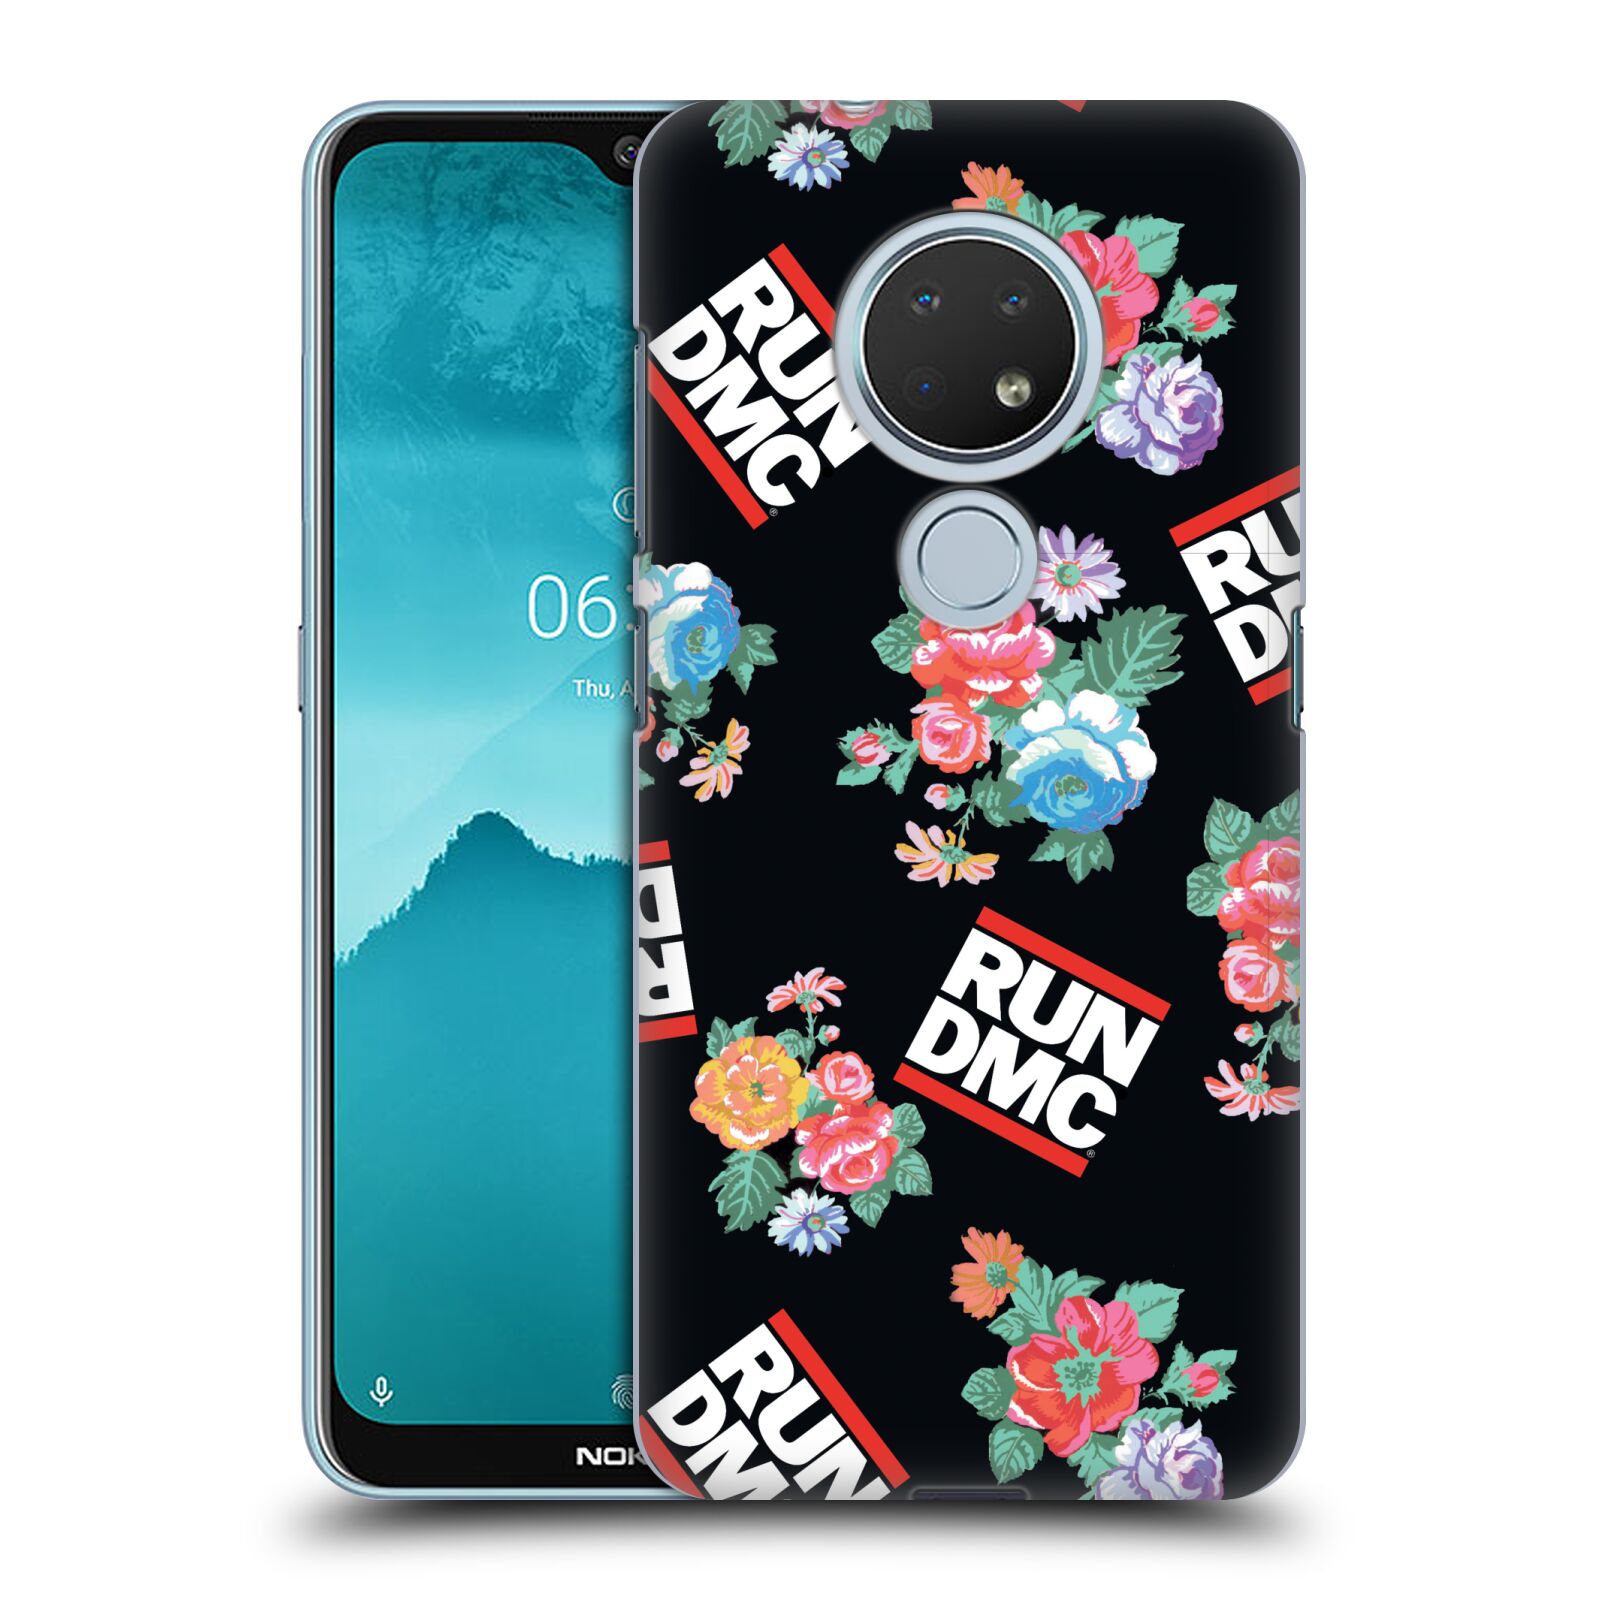 Pouzdro na mobil Nokia 6.2 - HEAD CASE - rapová kapela Run DMC květiny černé pozadí